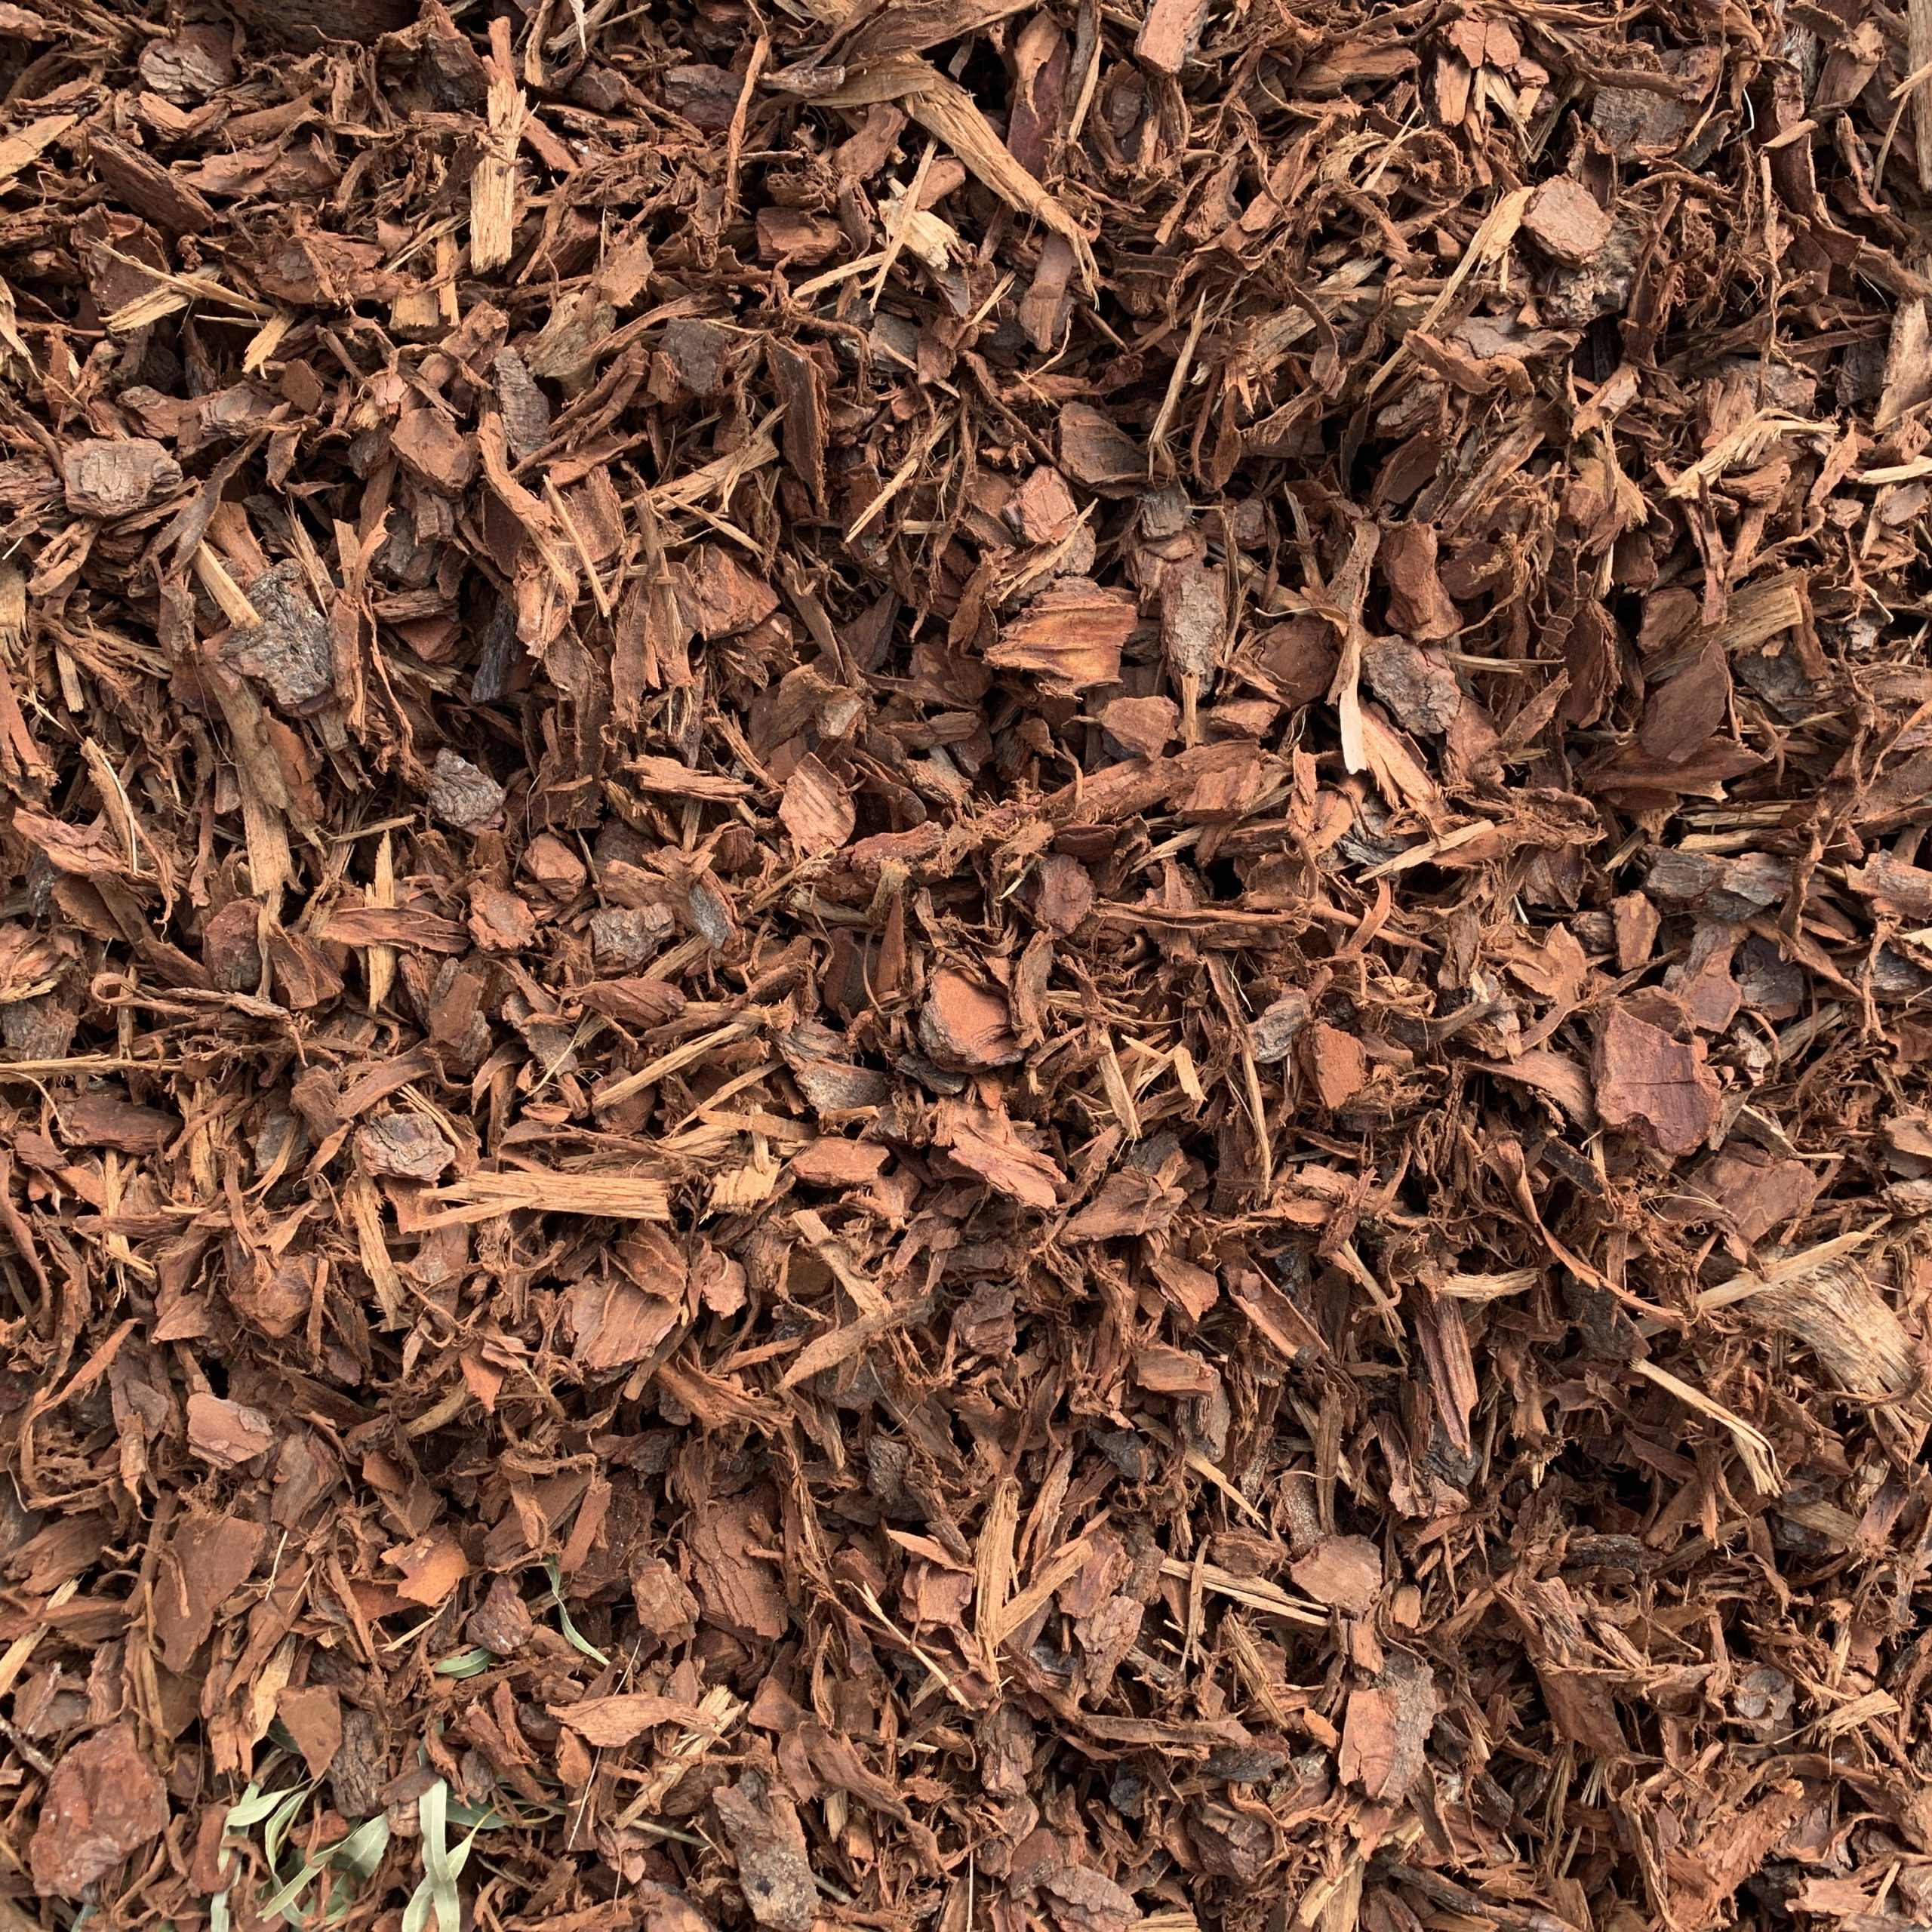 Pine Bark Nugets - Triad landscape supply